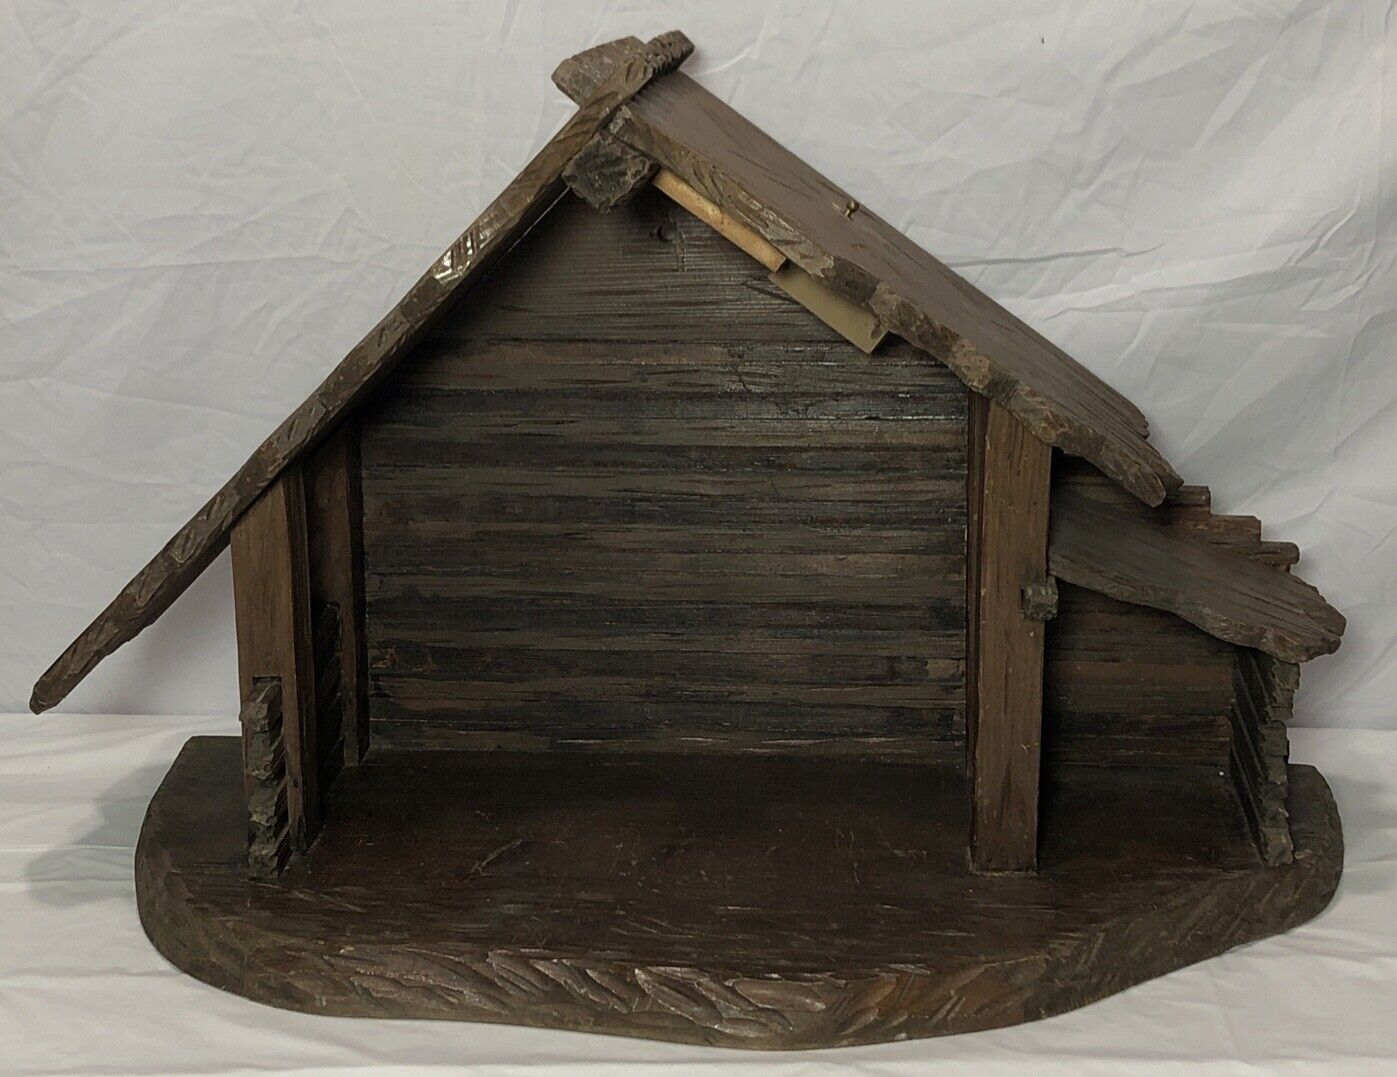 32”L x 21” H x 13”W Vintage Large Handmade Wooden Nativity Barn Stable Decor